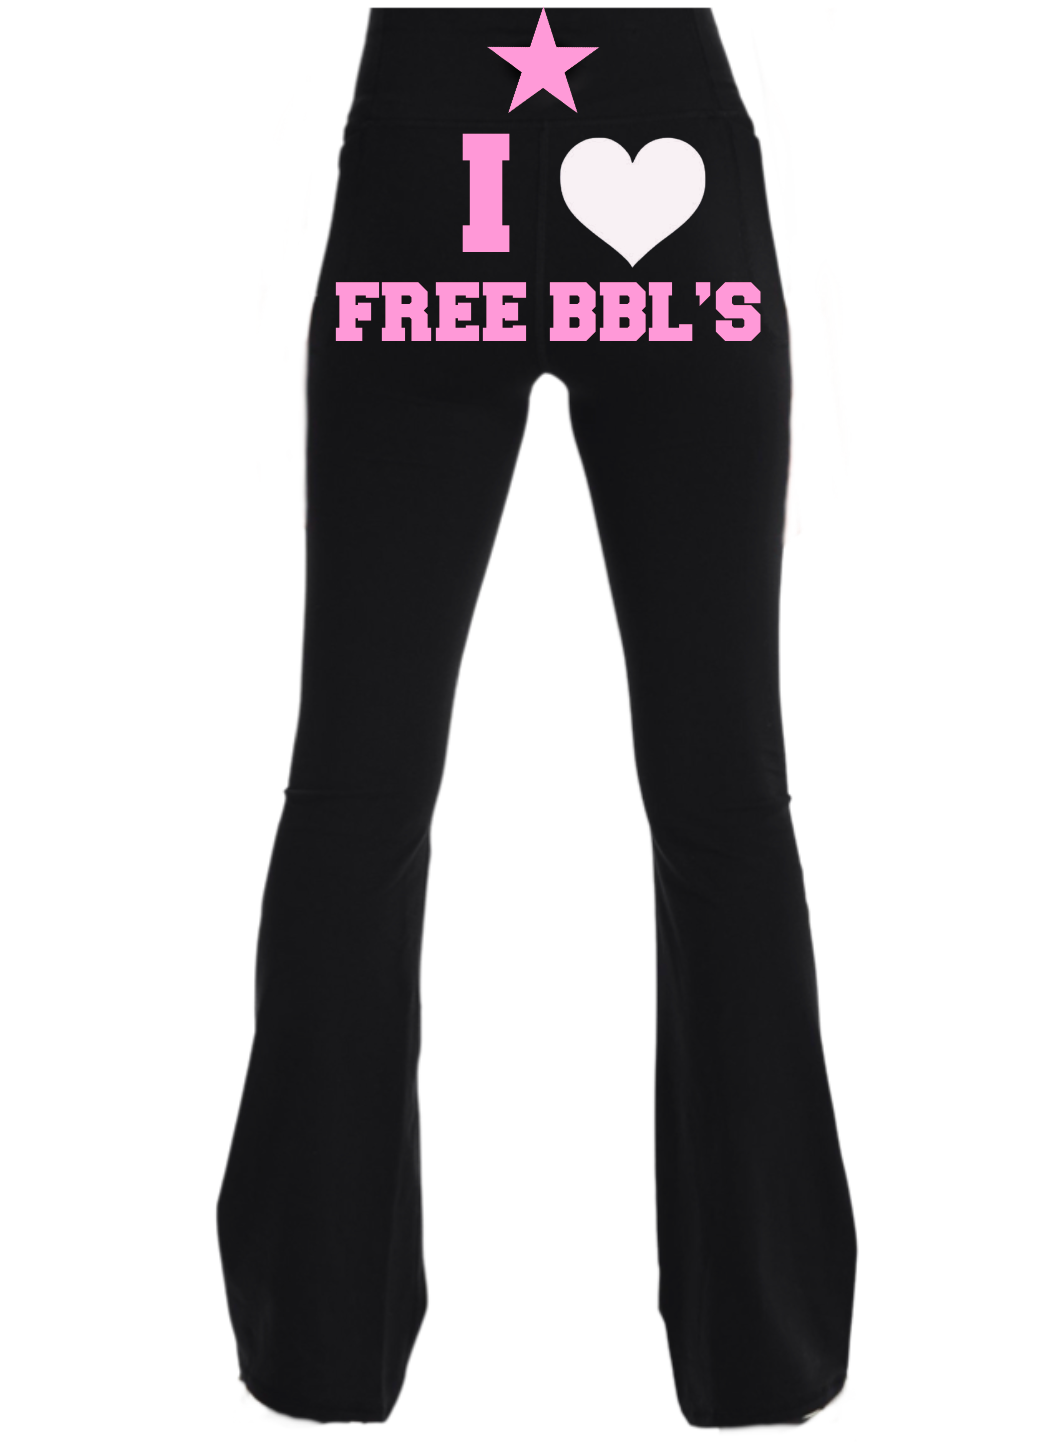 BBL Yoga Pants